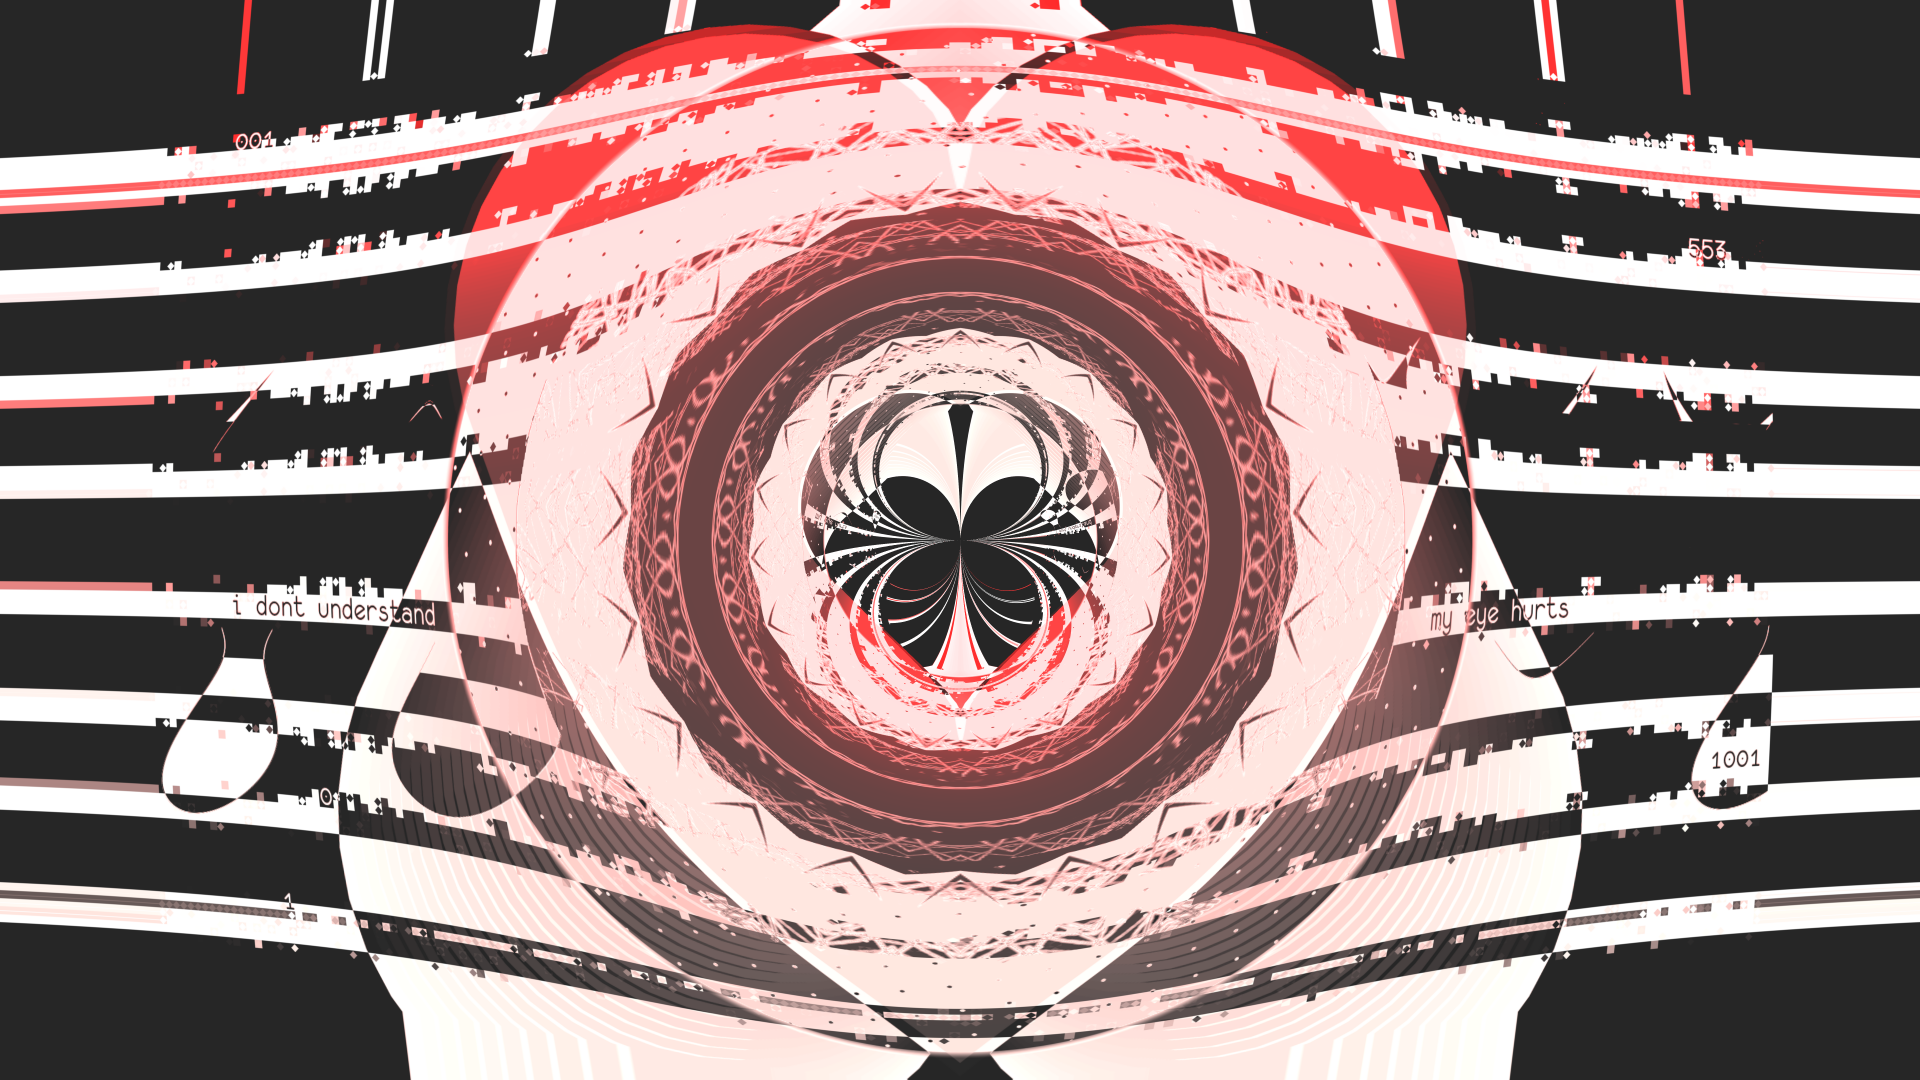 General 1920x1080 abstract digital art glitch art red heart (design)